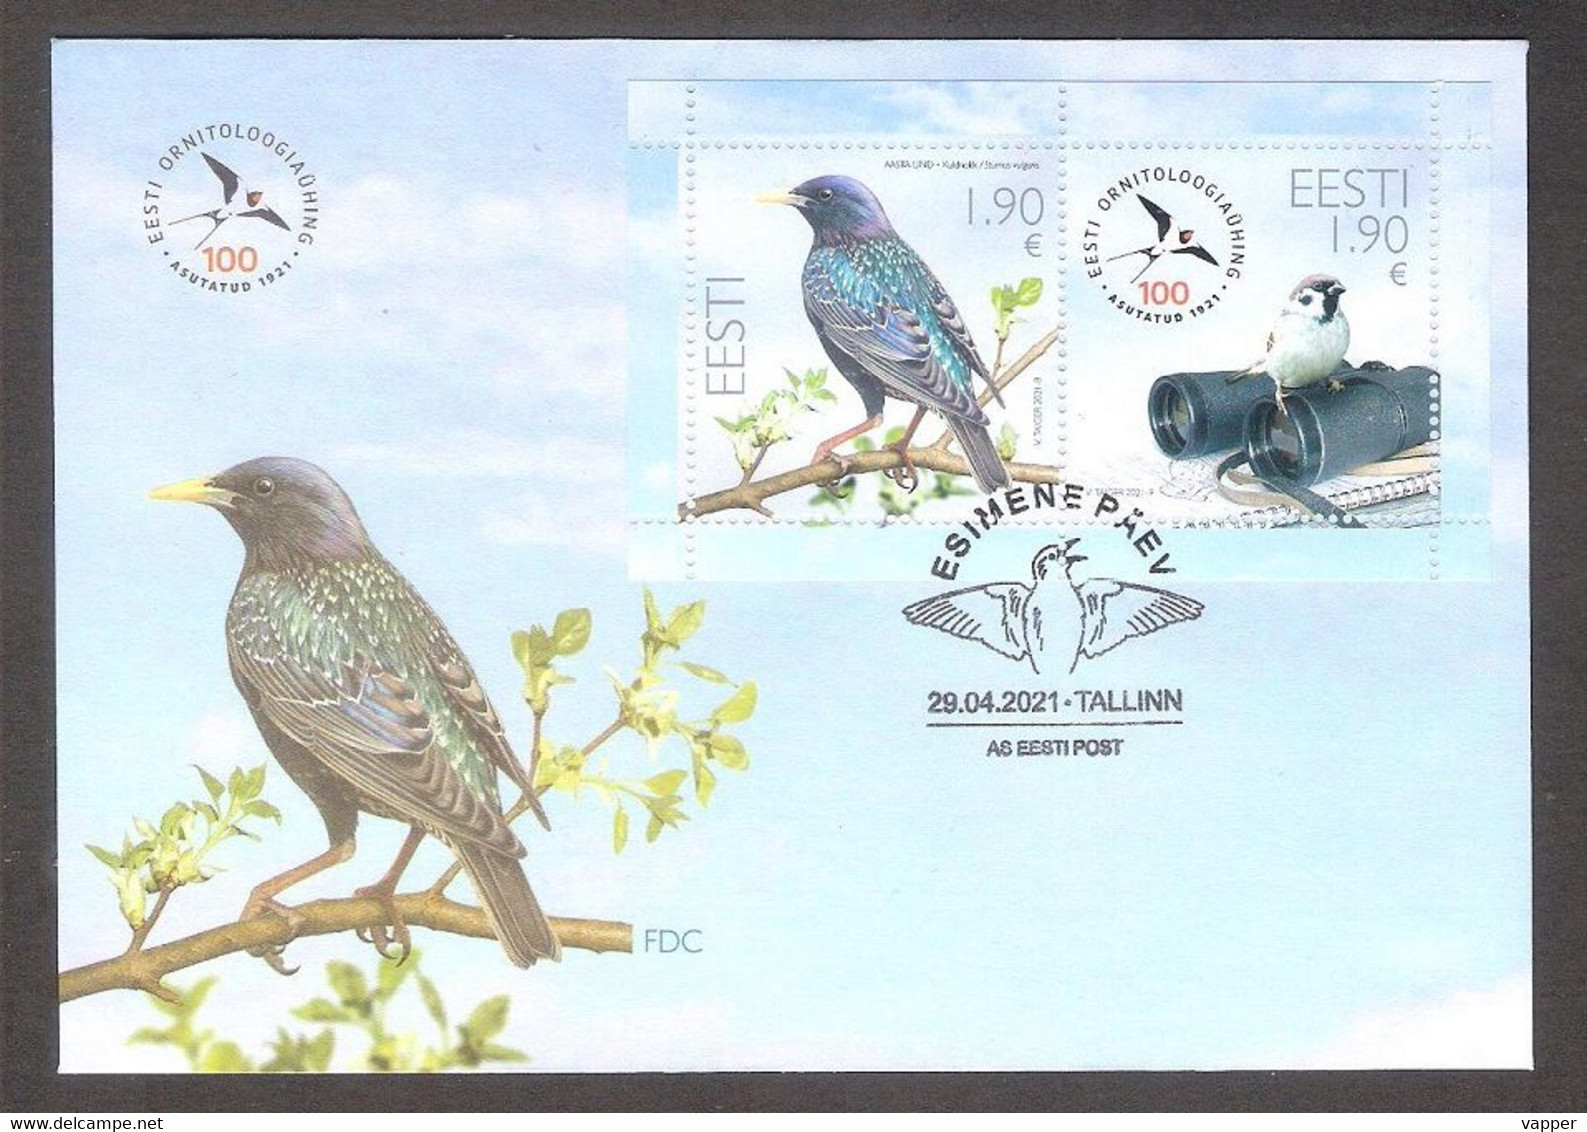 Bird Of The Year - Starling Estonia 2021 Sheet FDC 100 Ornitological Society Mi BL54 - Estonia